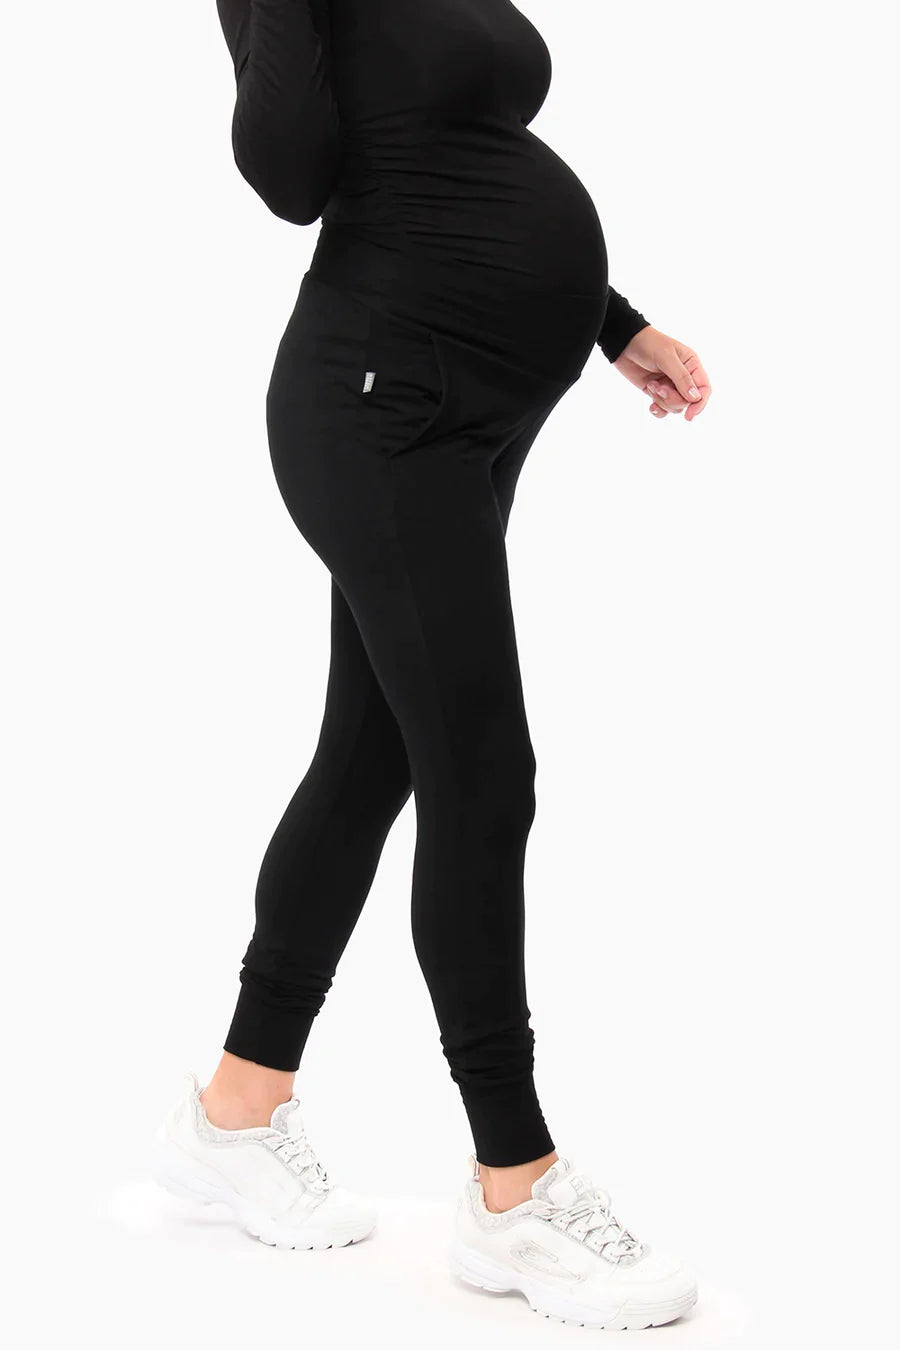 Soft Stretch Maternity Jogger Pants from Cherry Melon maternity online store brisbane sydney perth australia